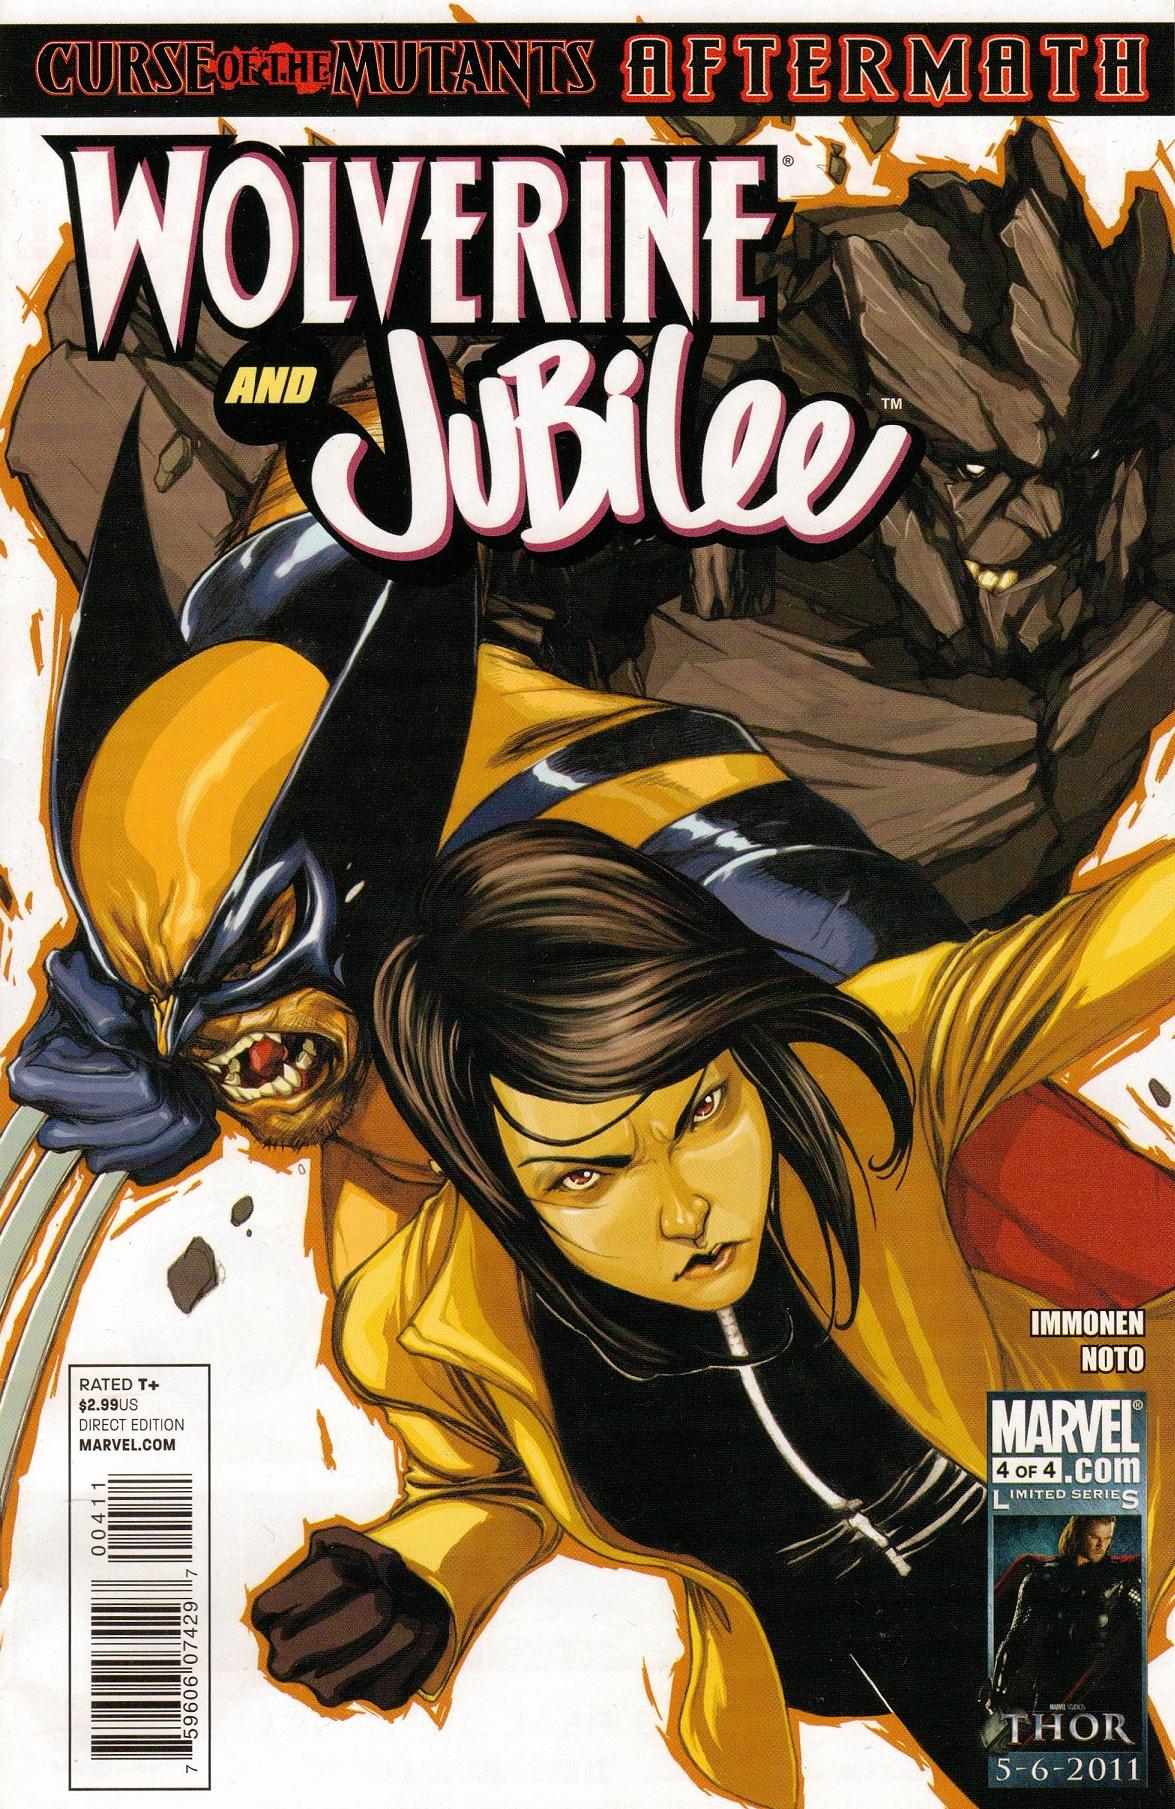 Wolverine and Jubilee Vol. 1 #4